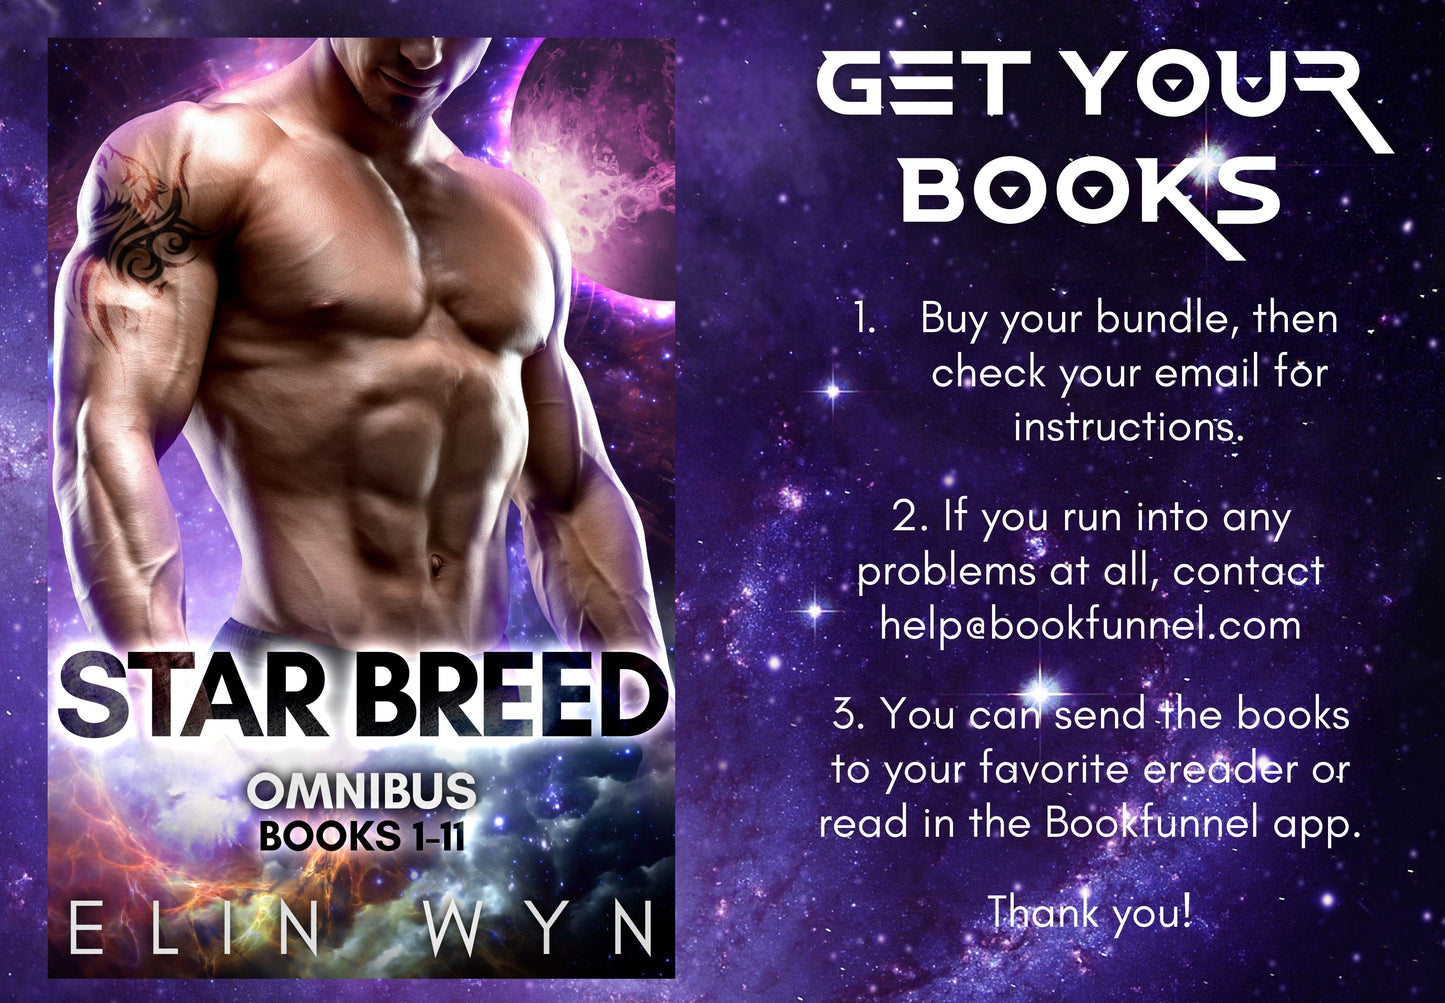 Star Breed Omnibus: Eleven books of science fiction romance adventure!